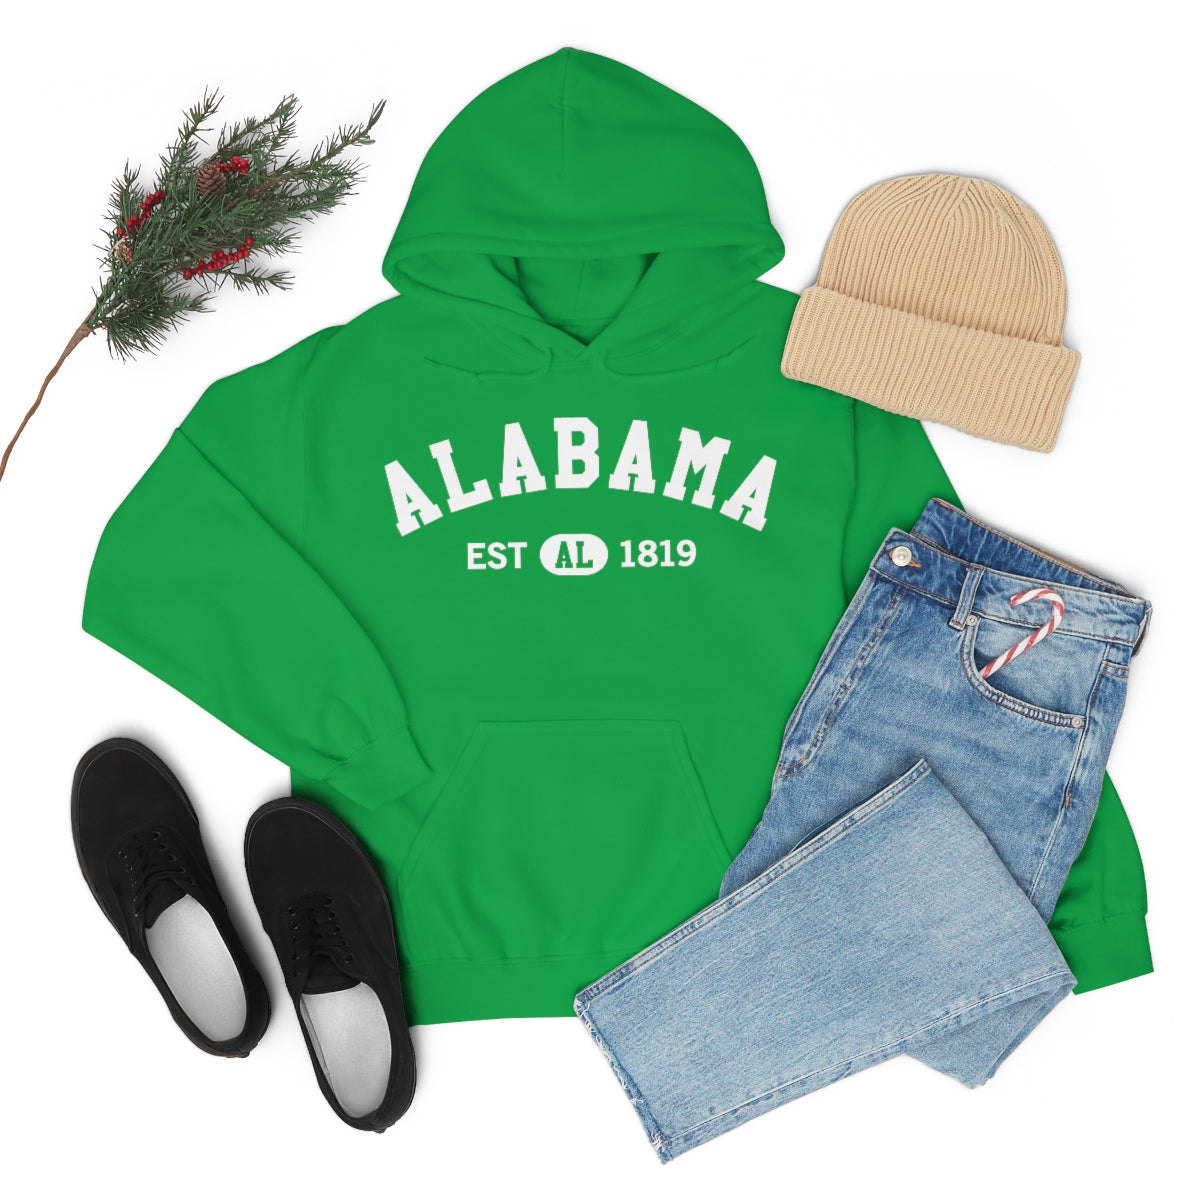 Alabama AL State Hoodie, I Love Alabama Retro Vintage Men Women Hooded Sweatshirt Pride Patriotic USA Gifts Hiking Pullover Starcove Fashion